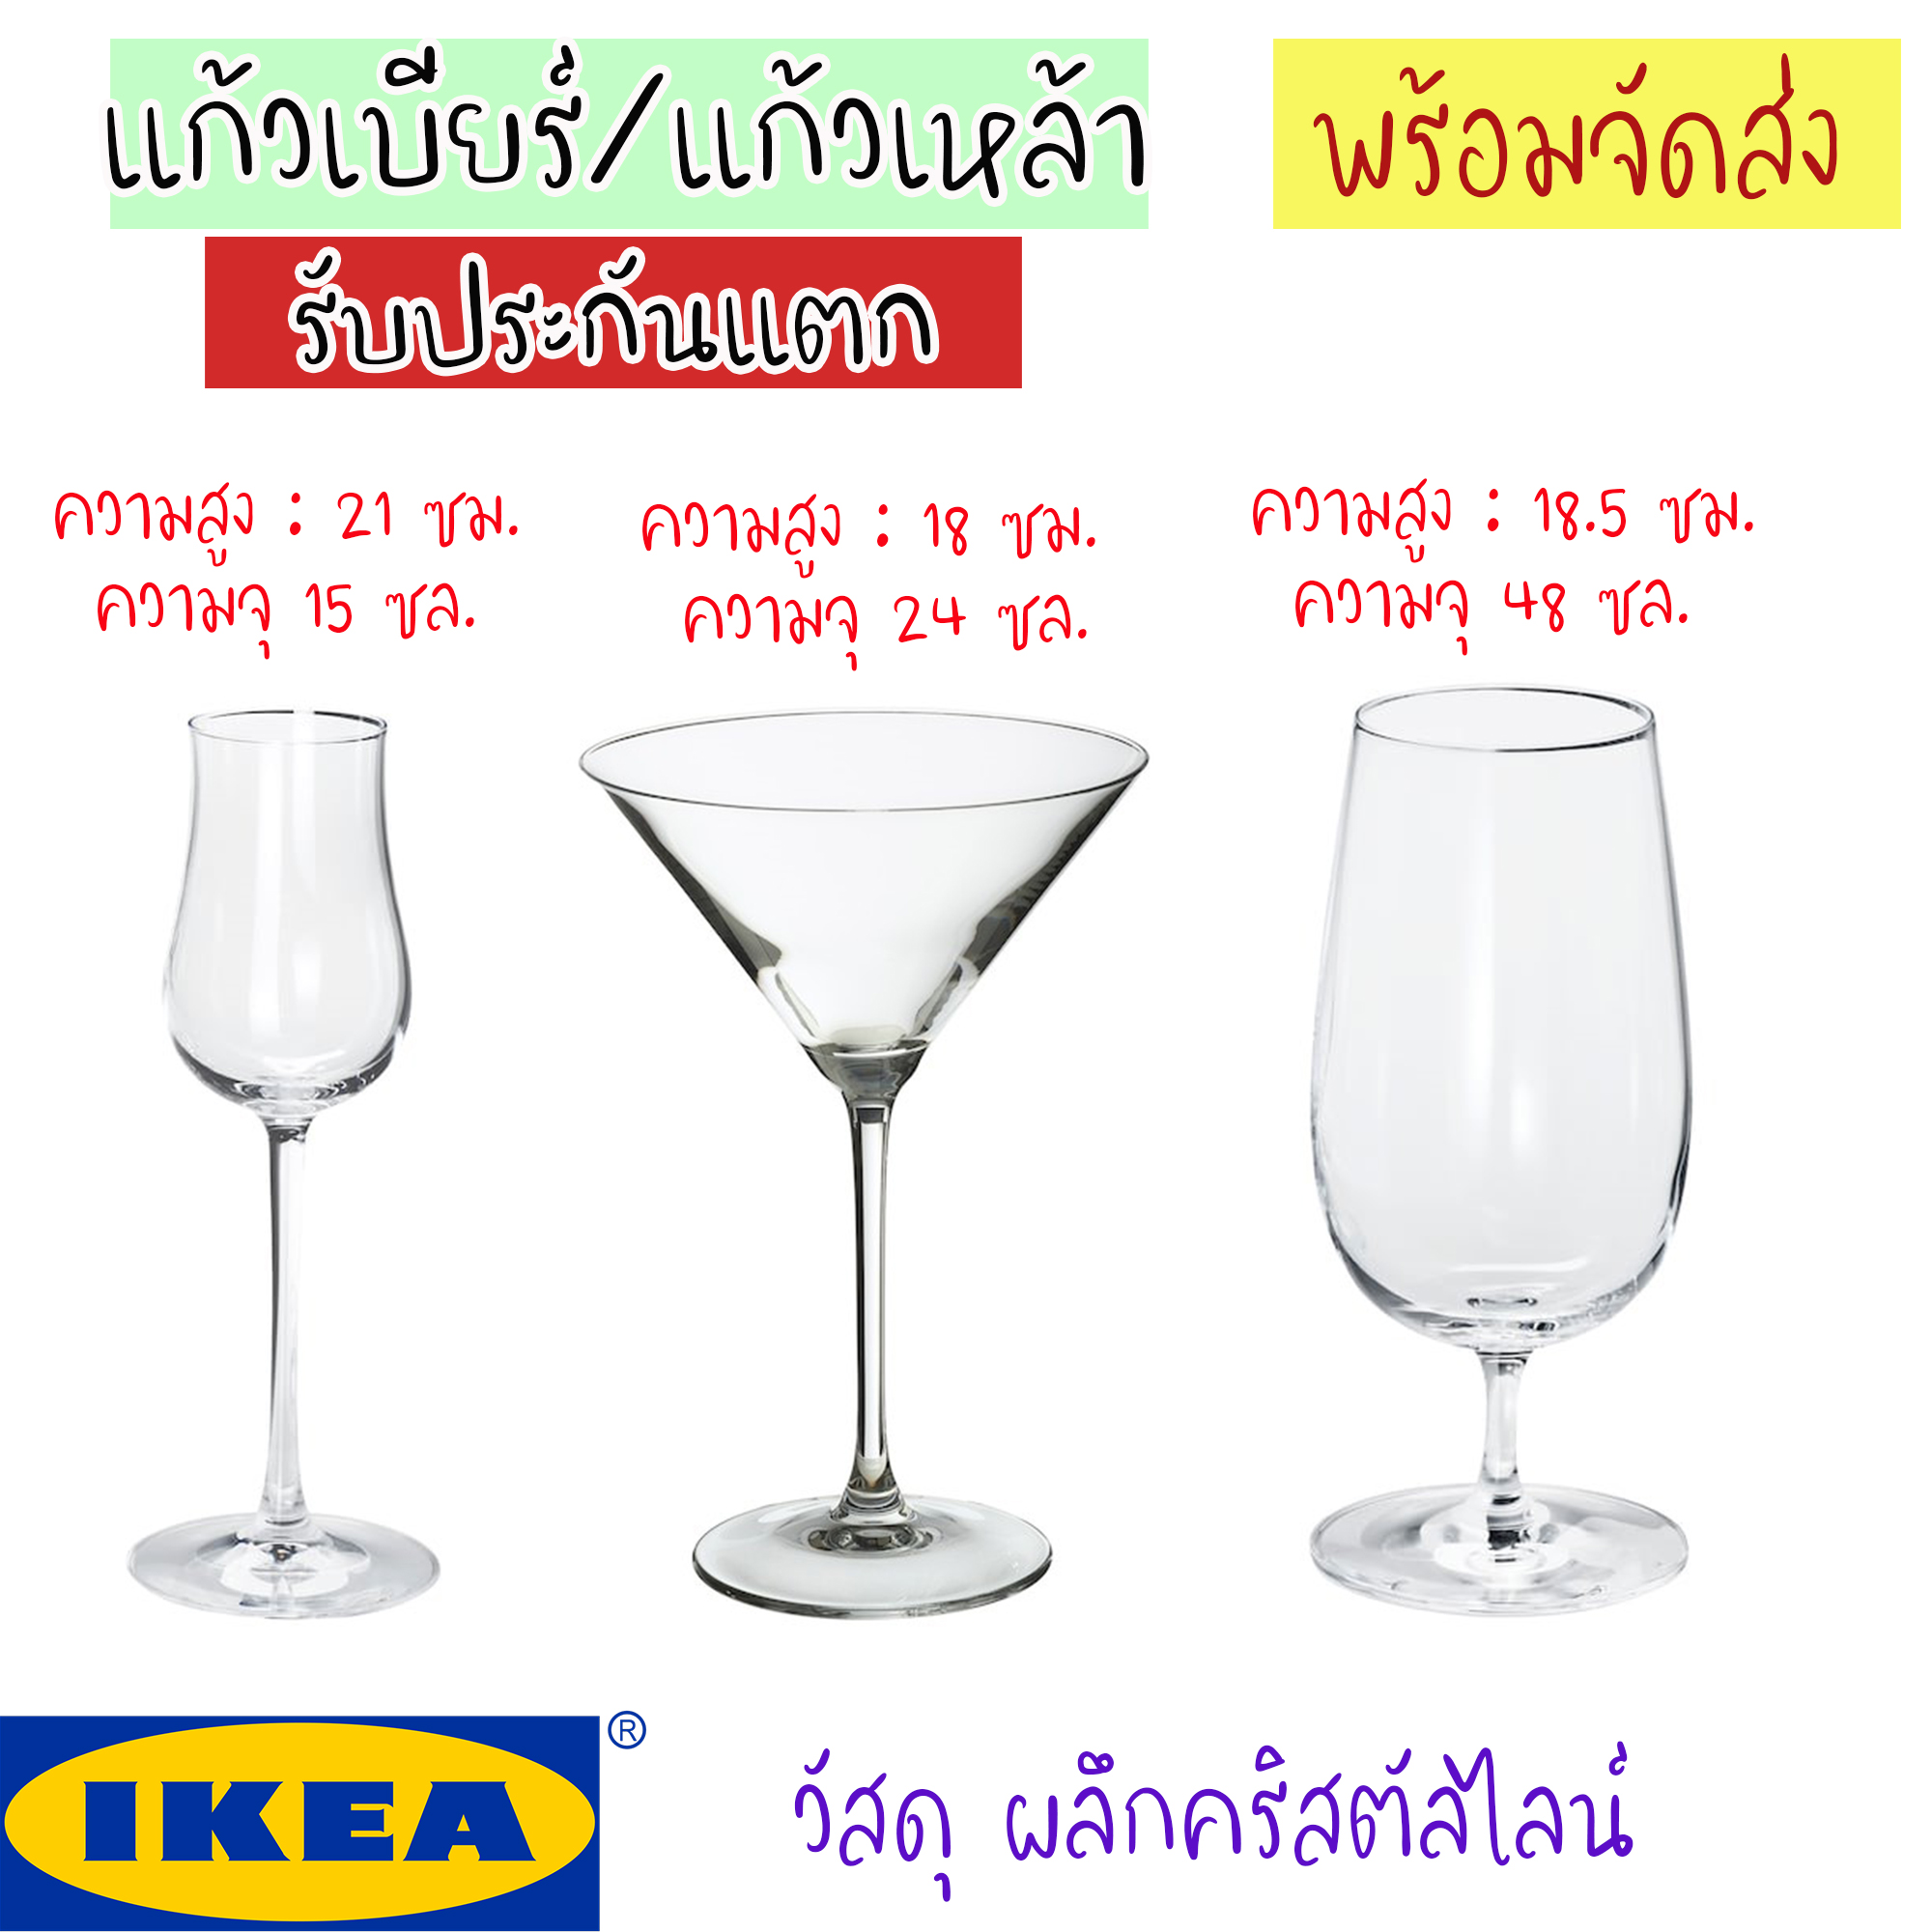 STORSINT สตูร์ชินต์ แก้วเหล้าหวาน, แก้วใส 15 ซล. แก้วมาร์ตินี, แก้วใส 24 ซล. และ แก้วเบียร์, แก้วใส 48 ซล. รับประกันแตก IKEA